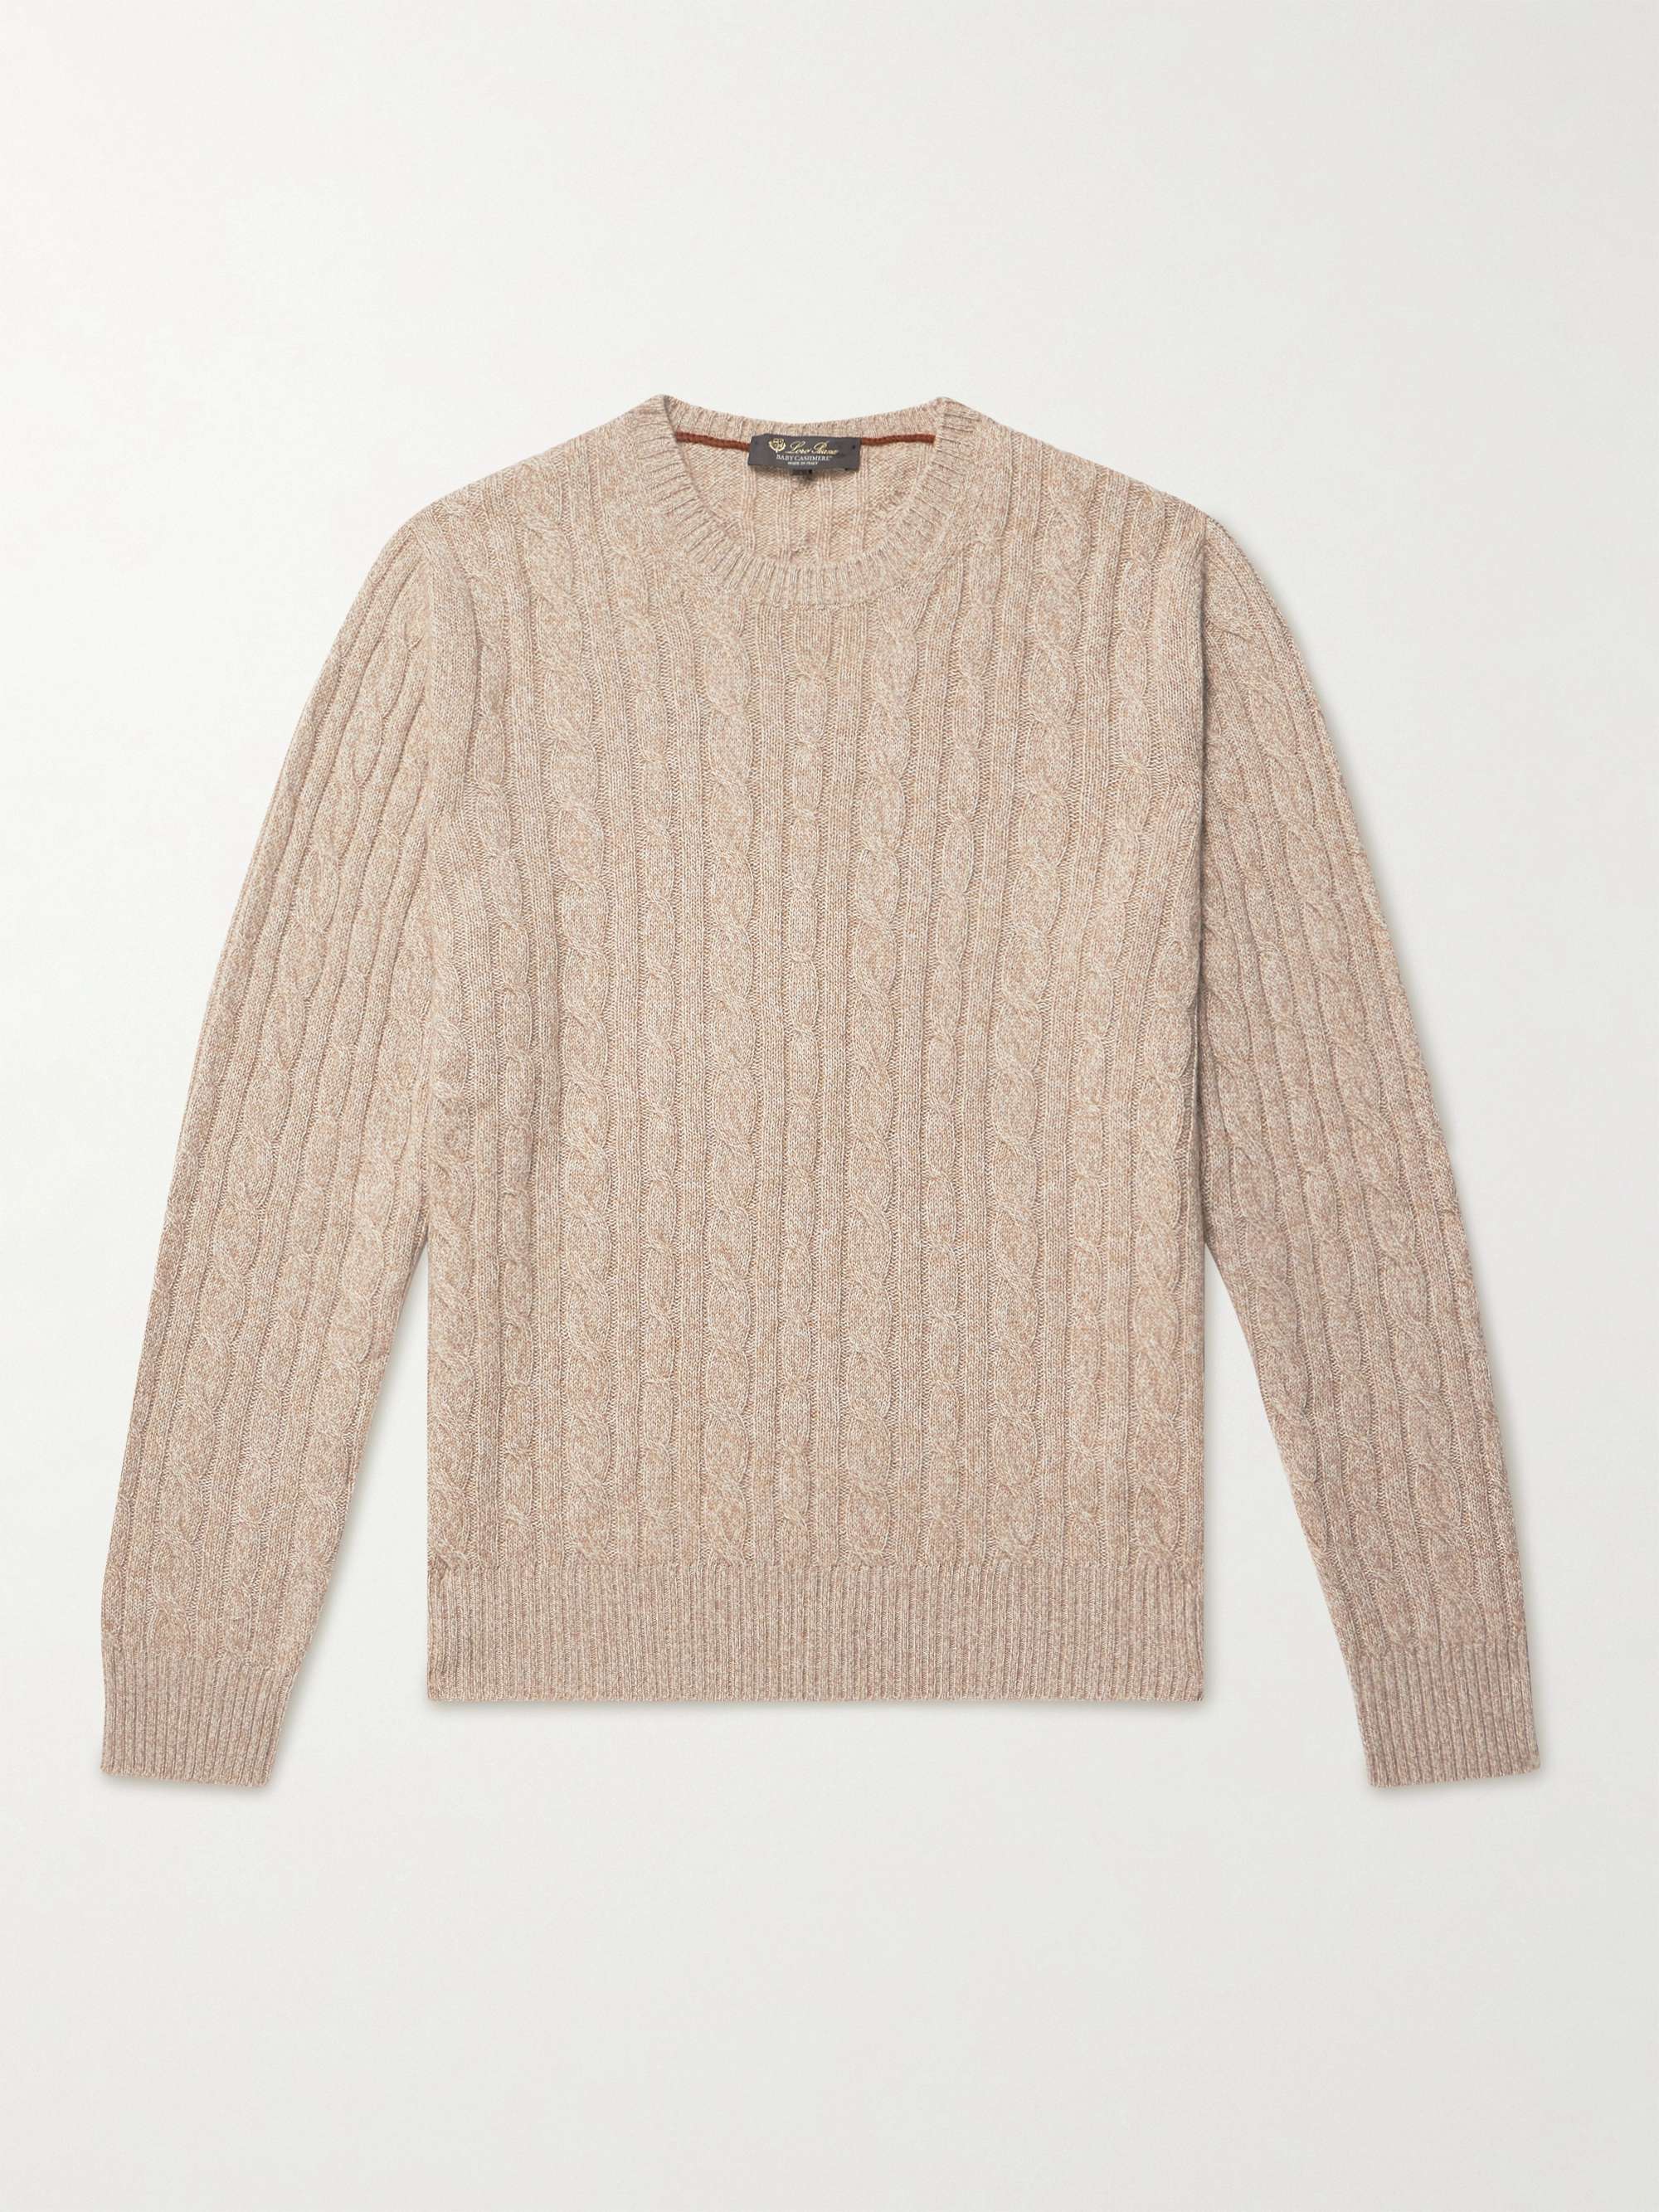 LORO PIANA Slim-Fit Cable-Knit Cashmere Sweater for Men | MR PORTER